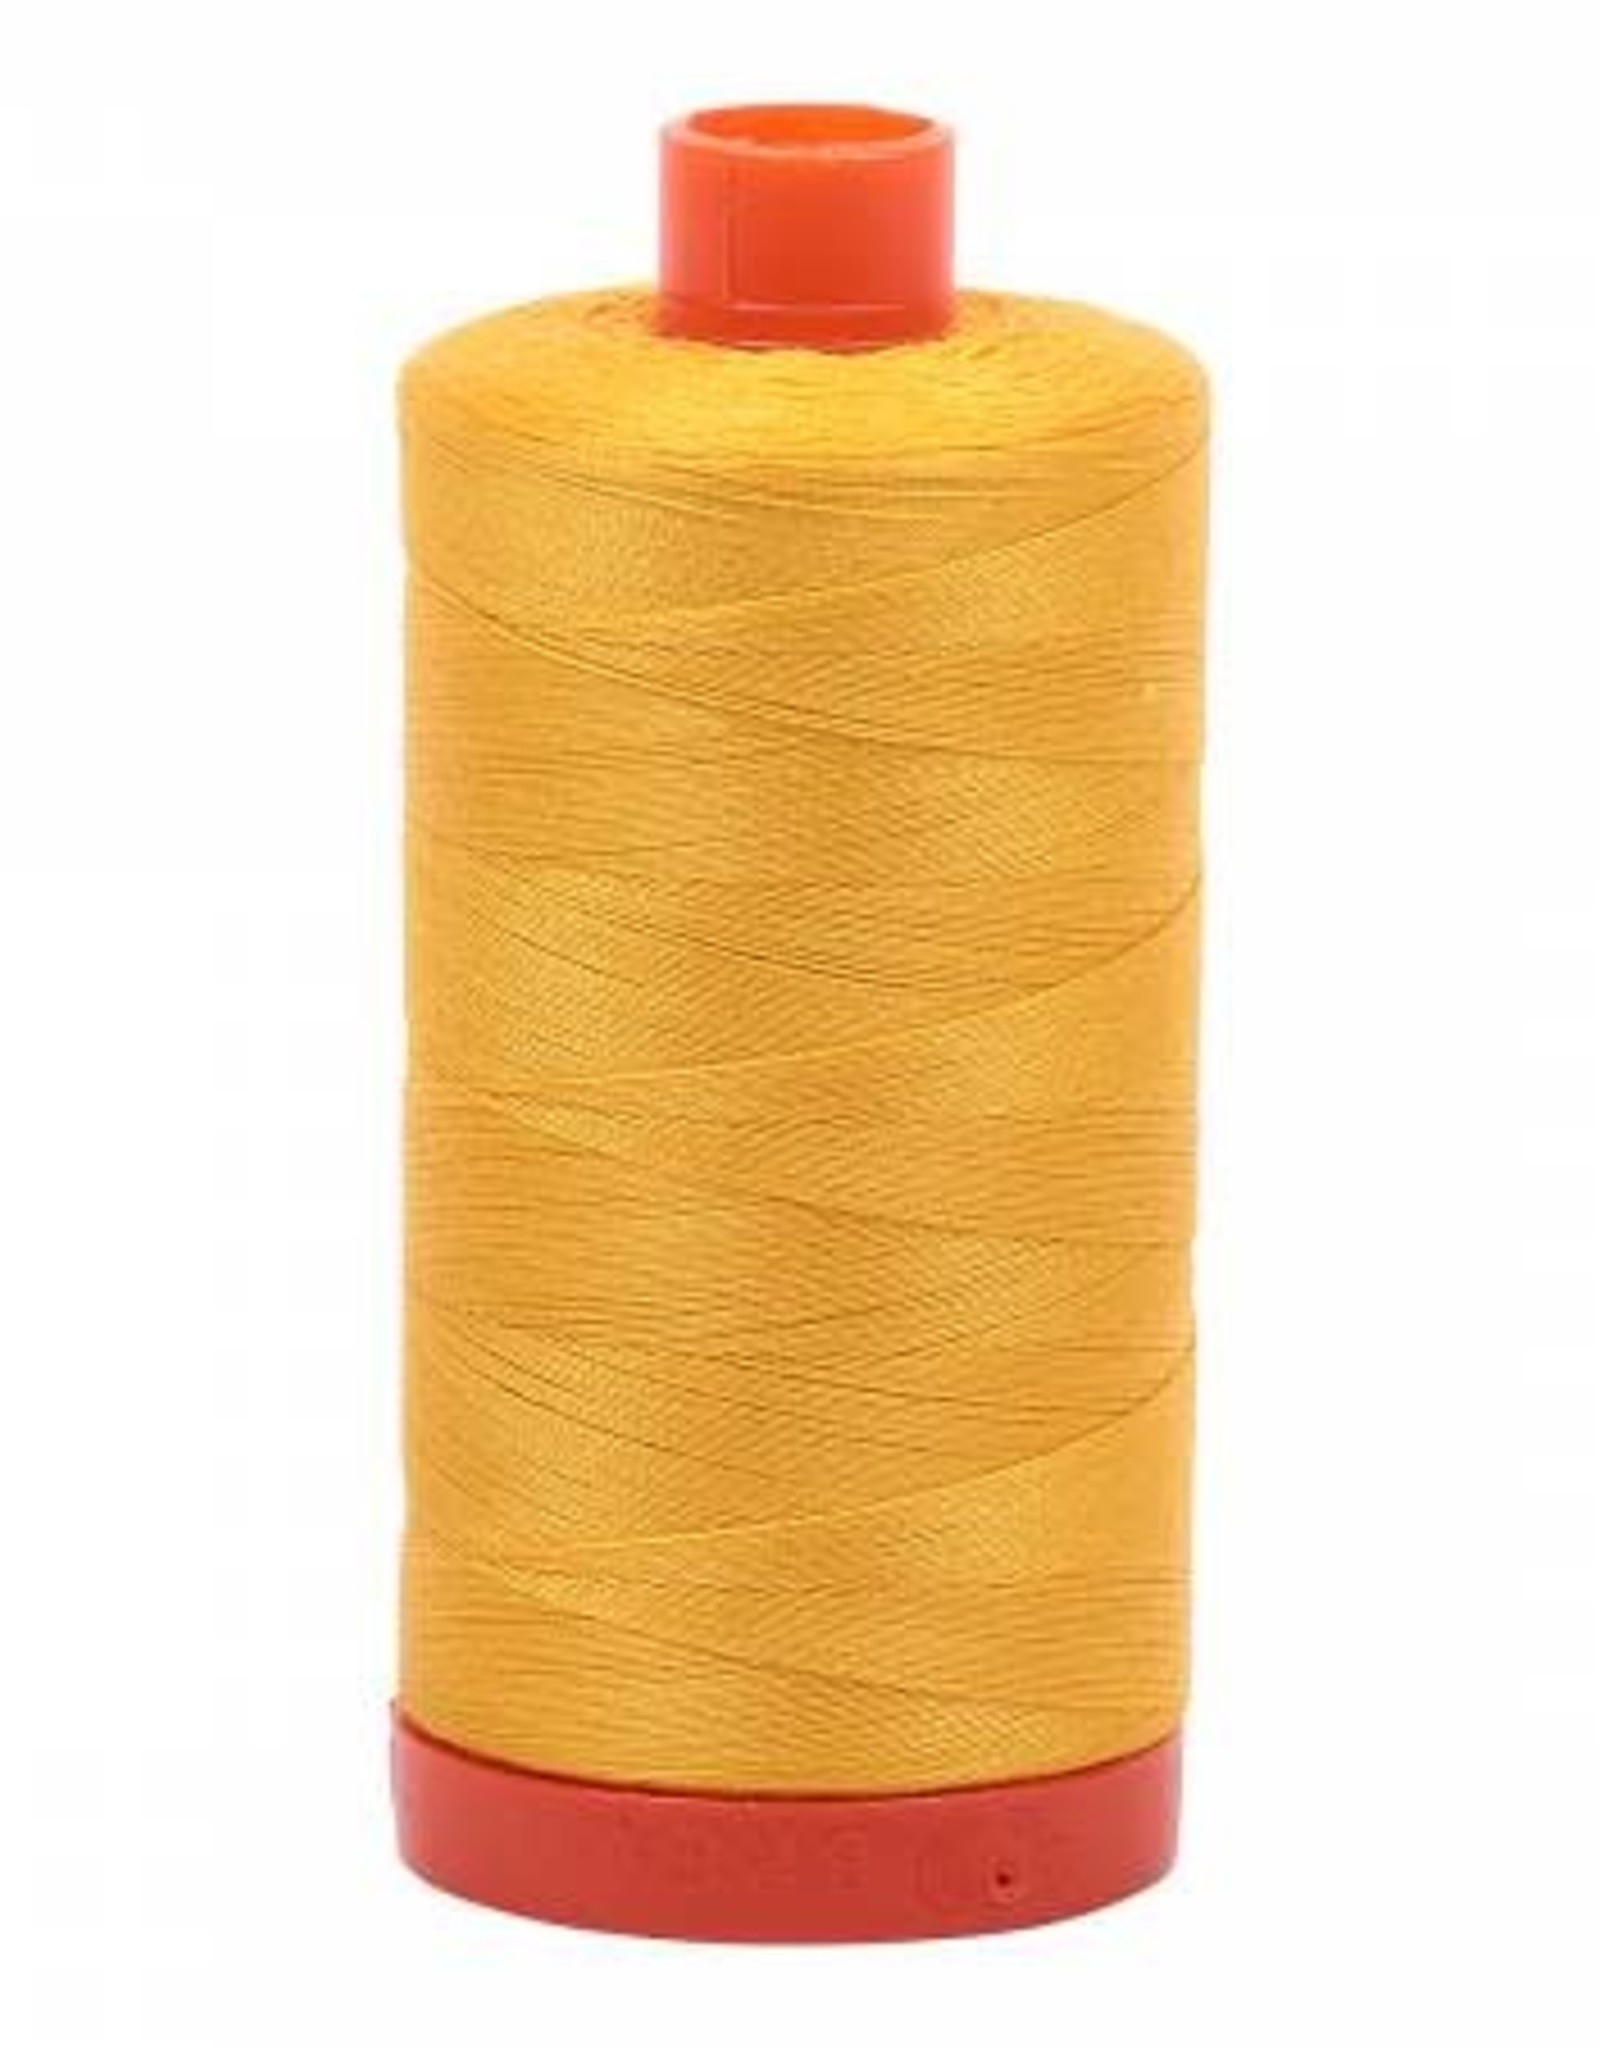 Mako Cotton Thread Solid 50wt - Yellow (2135)